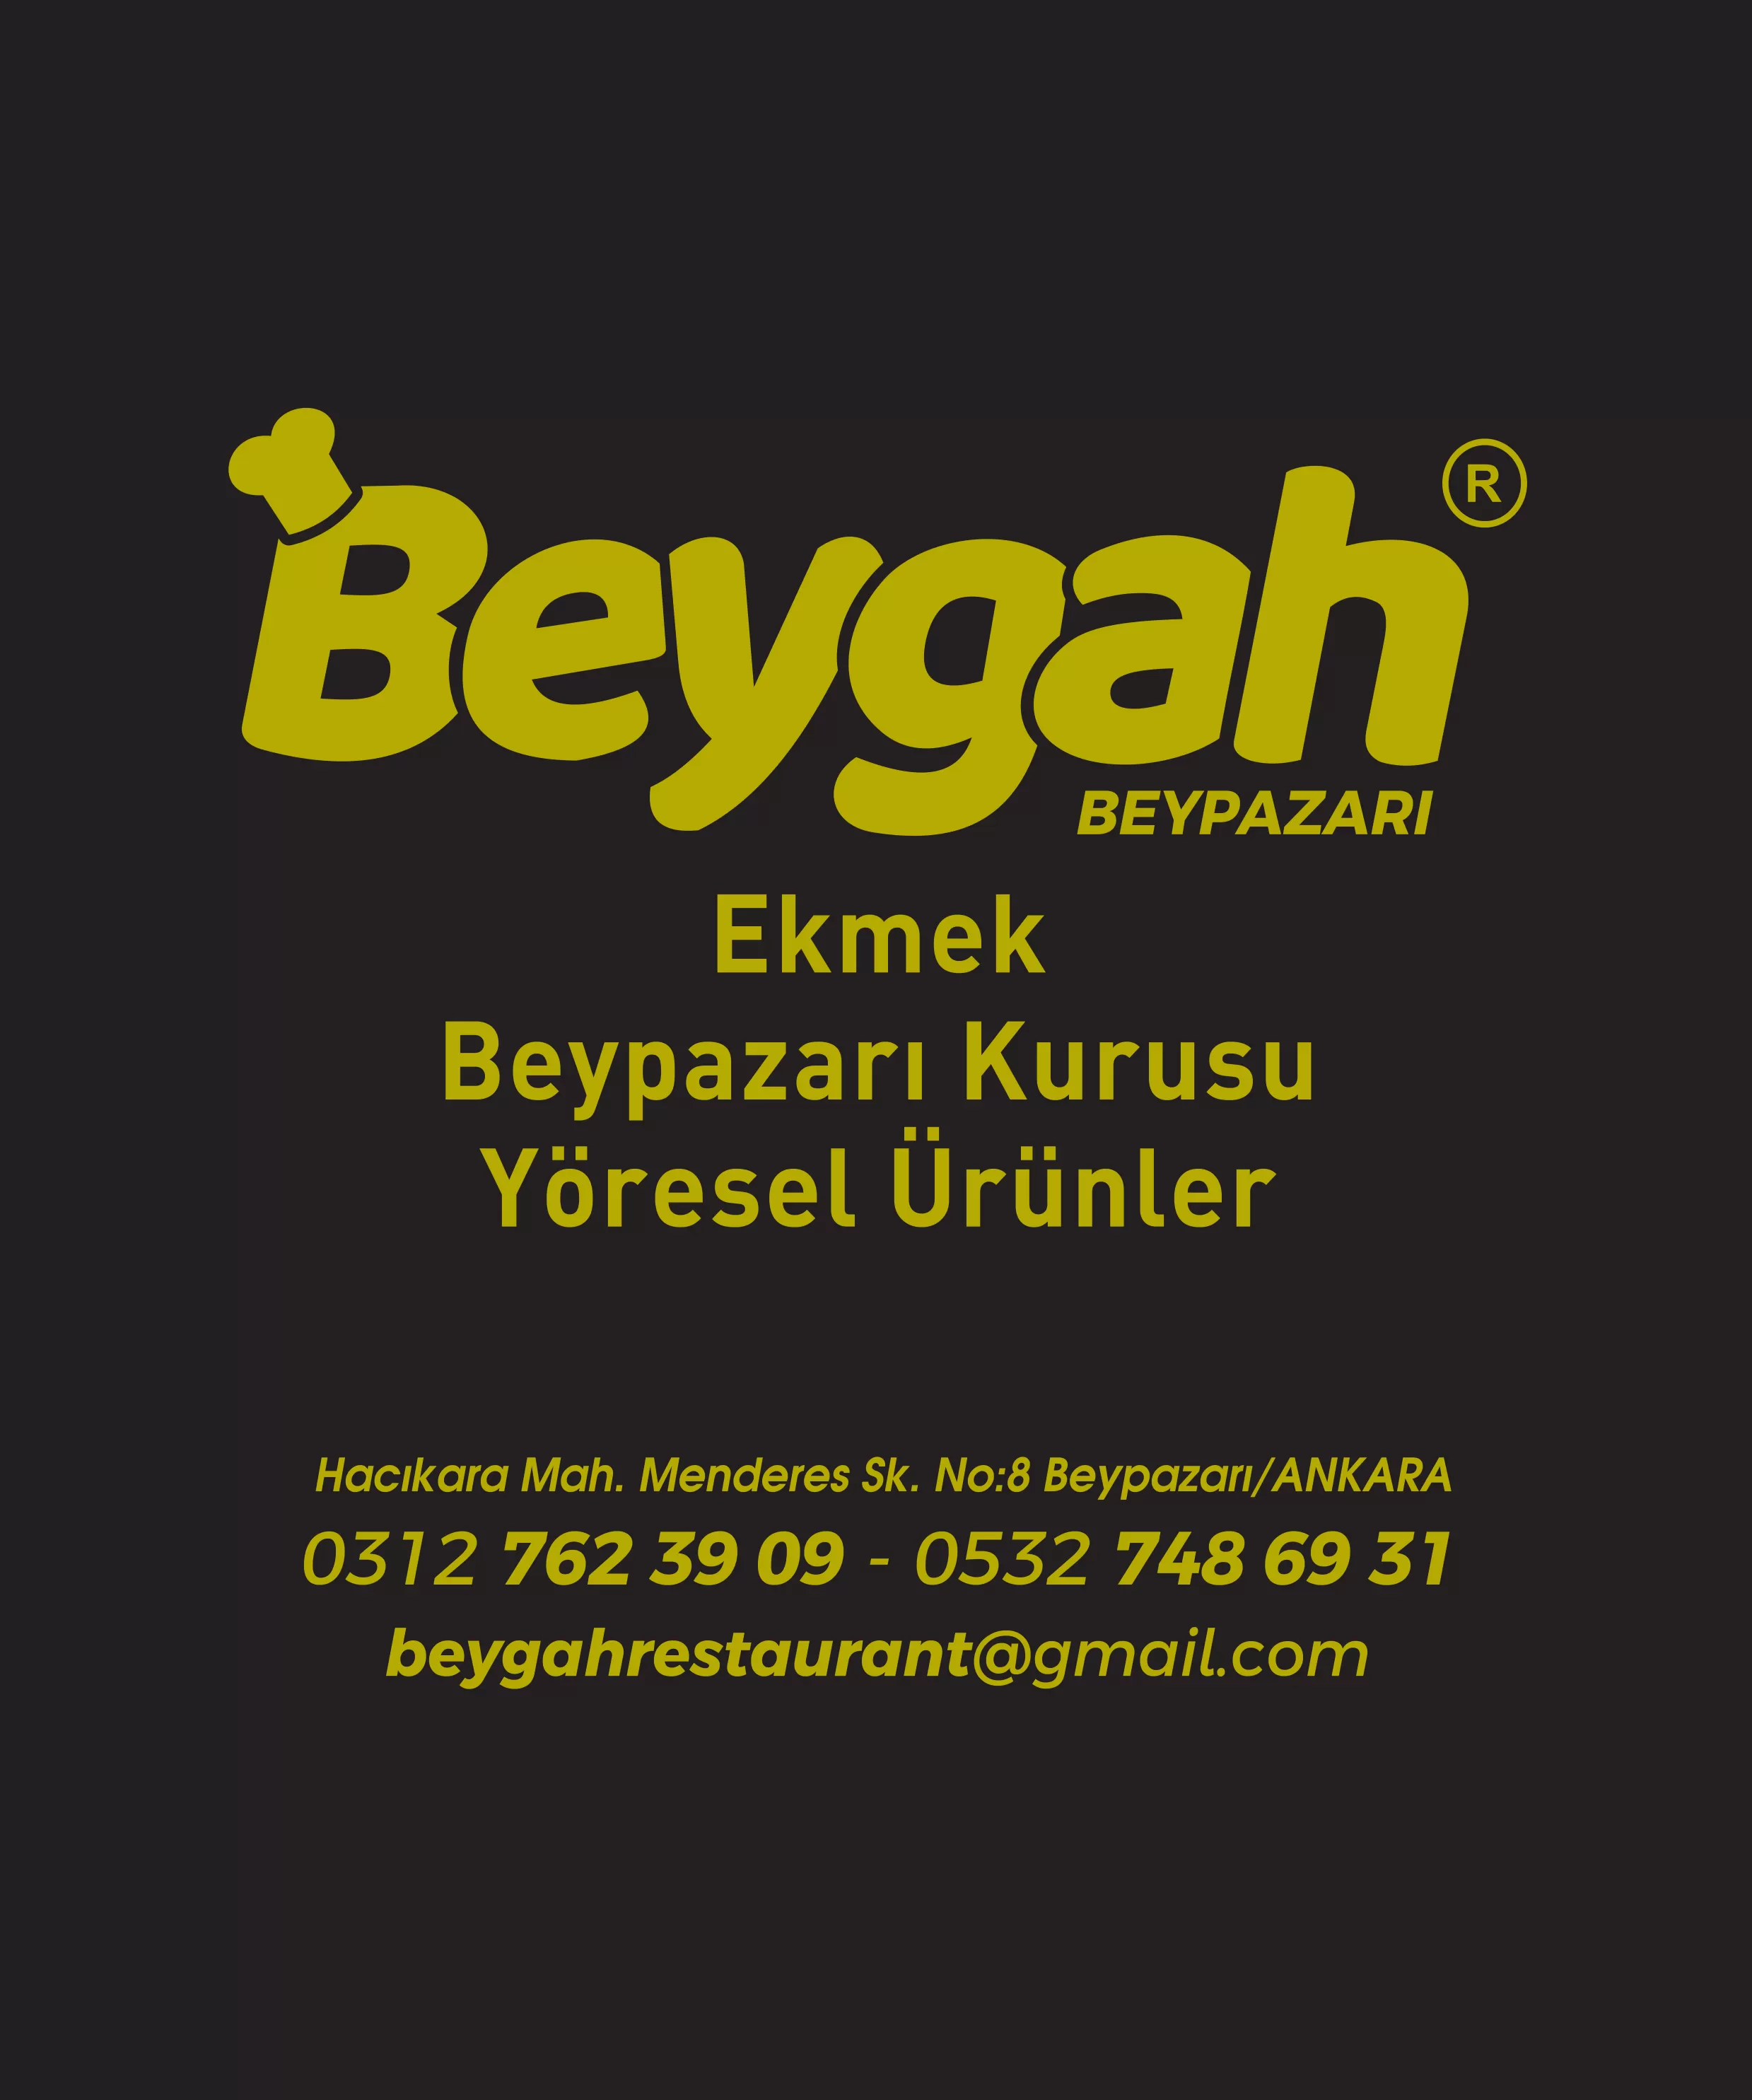 Beygah